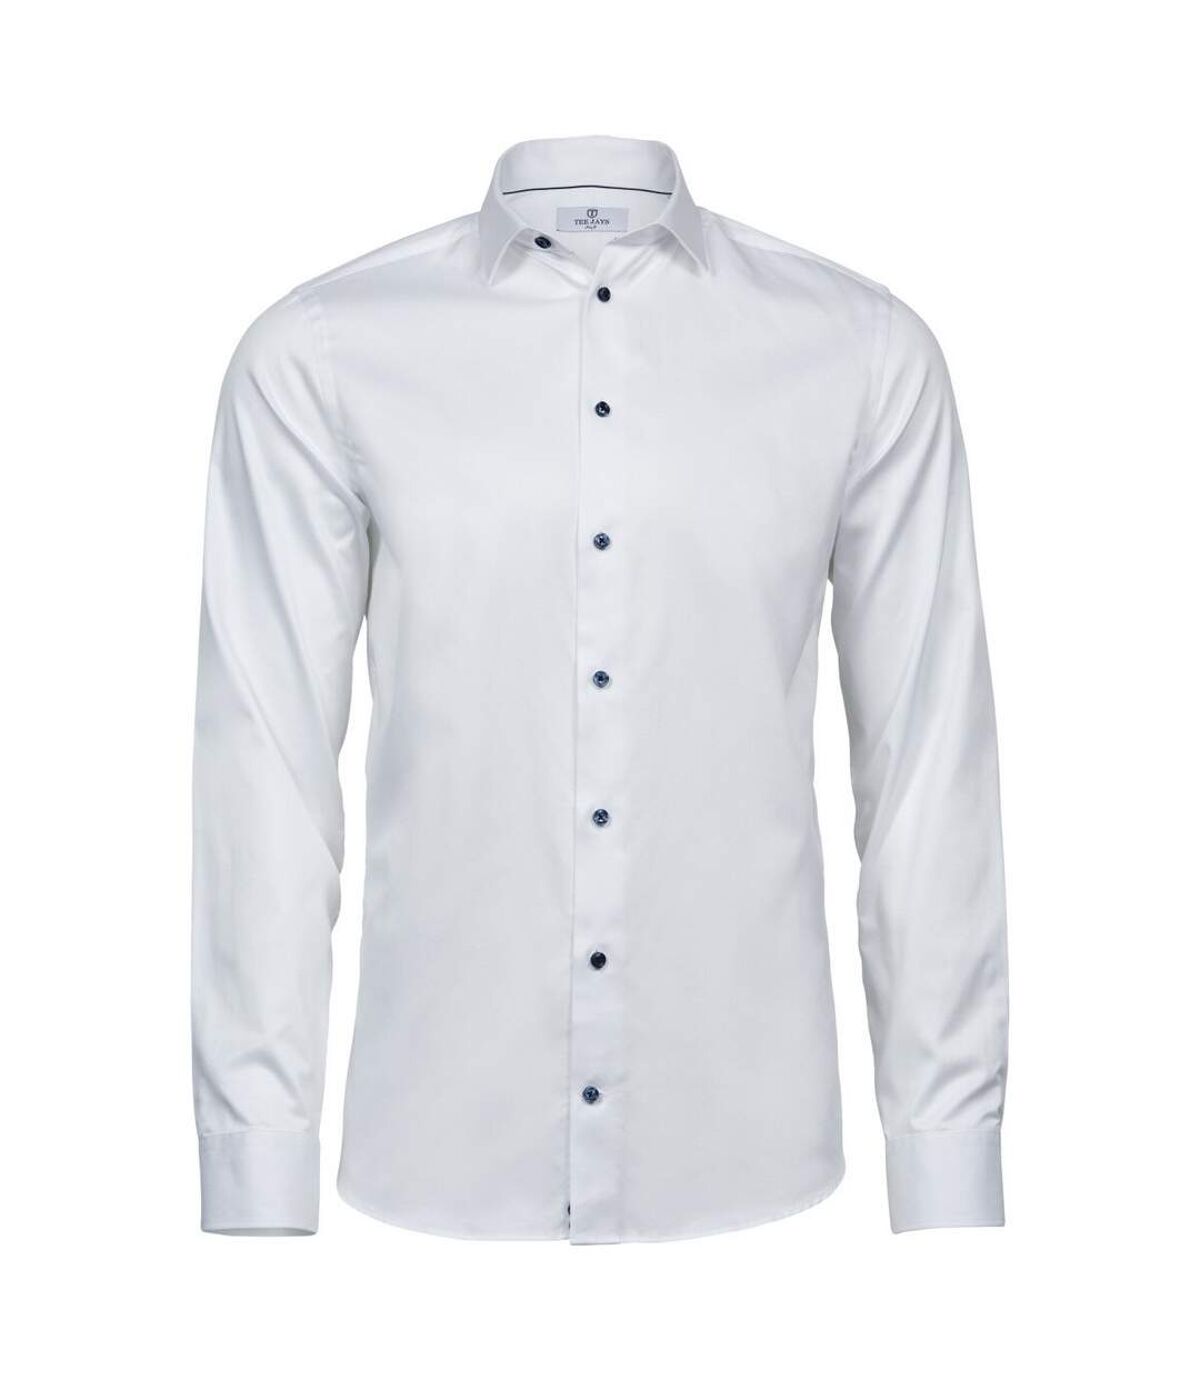 Tee Jay s Mens Luxury Slim Fit Shirt (Blanc / bleu) - UTBC4570